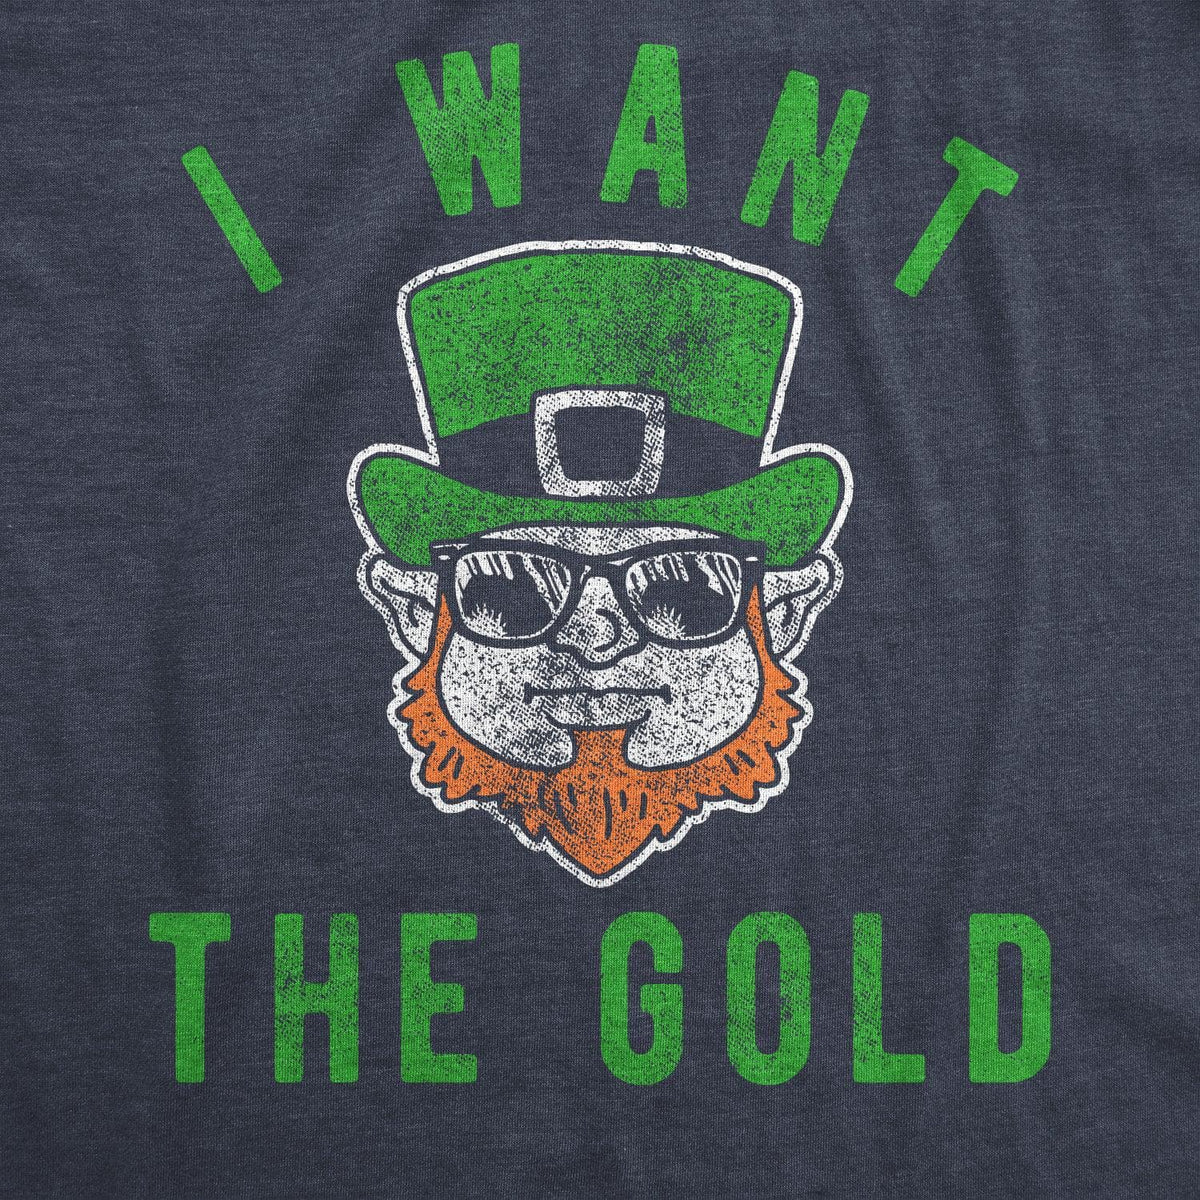 I Want The Gold Men&#39;s Tshirt  -  Crazy Dog T-Shirts